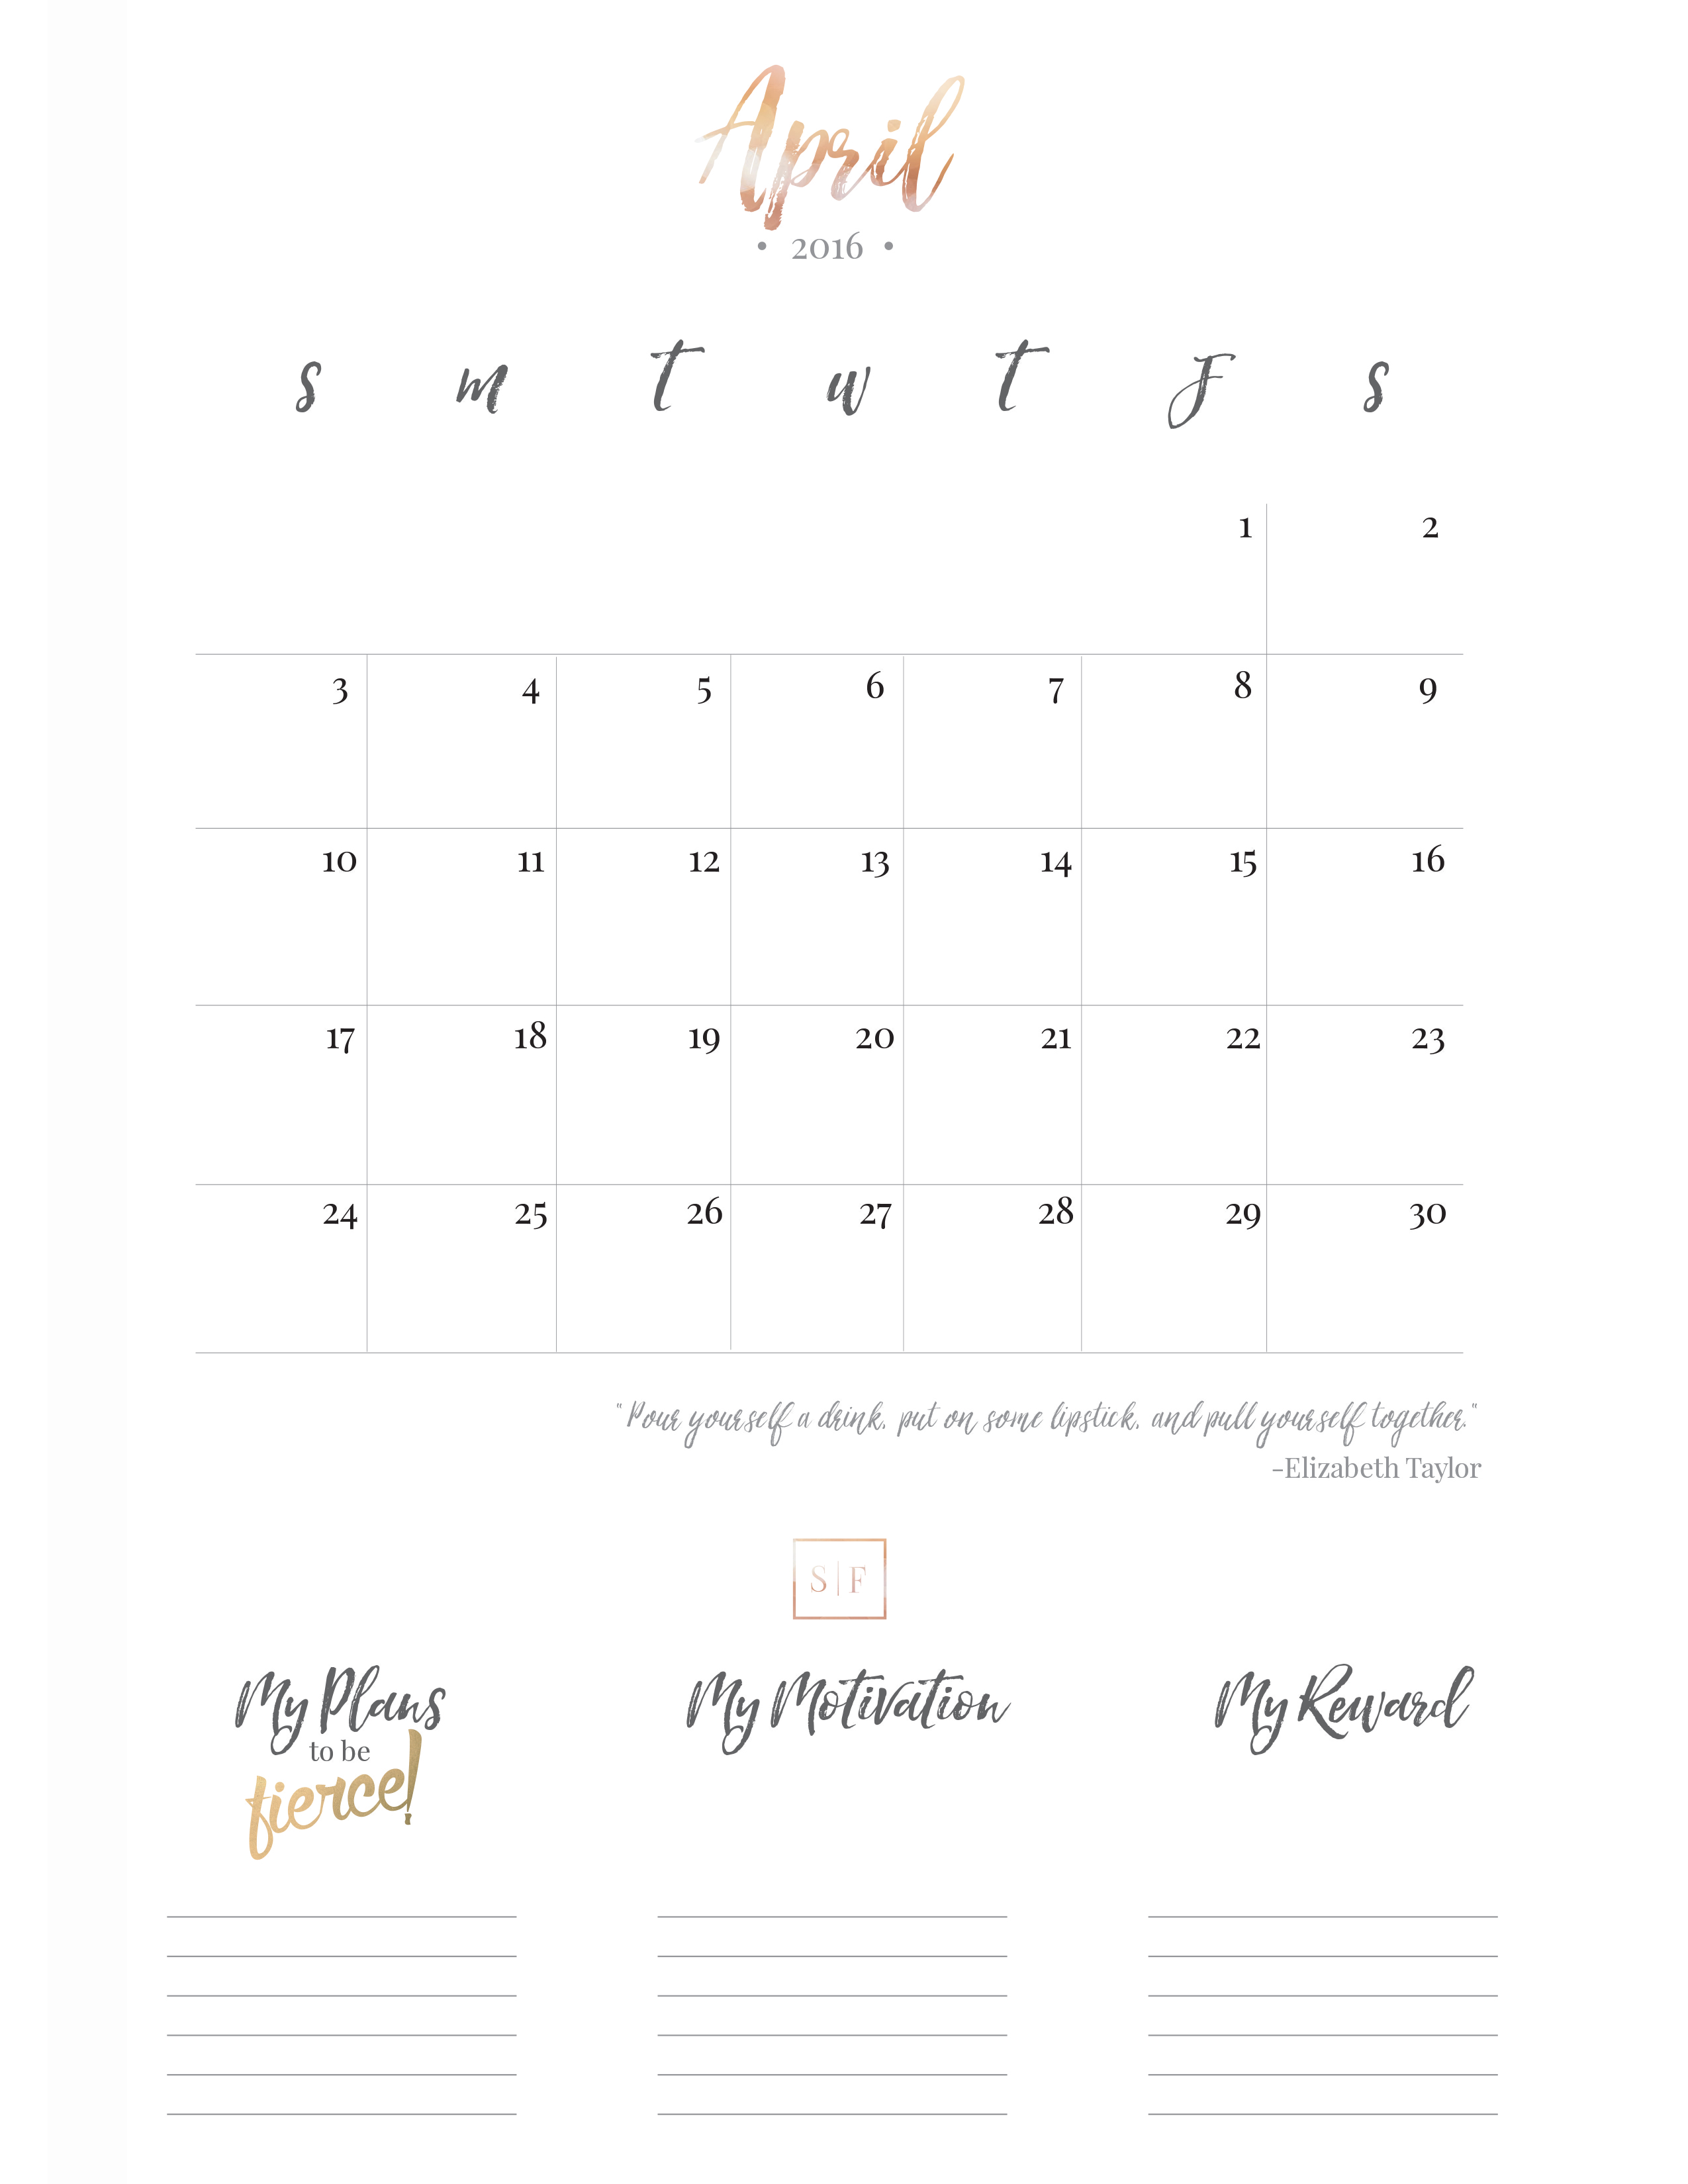 Download Your Free April Goal setting Calendar Showit Blog